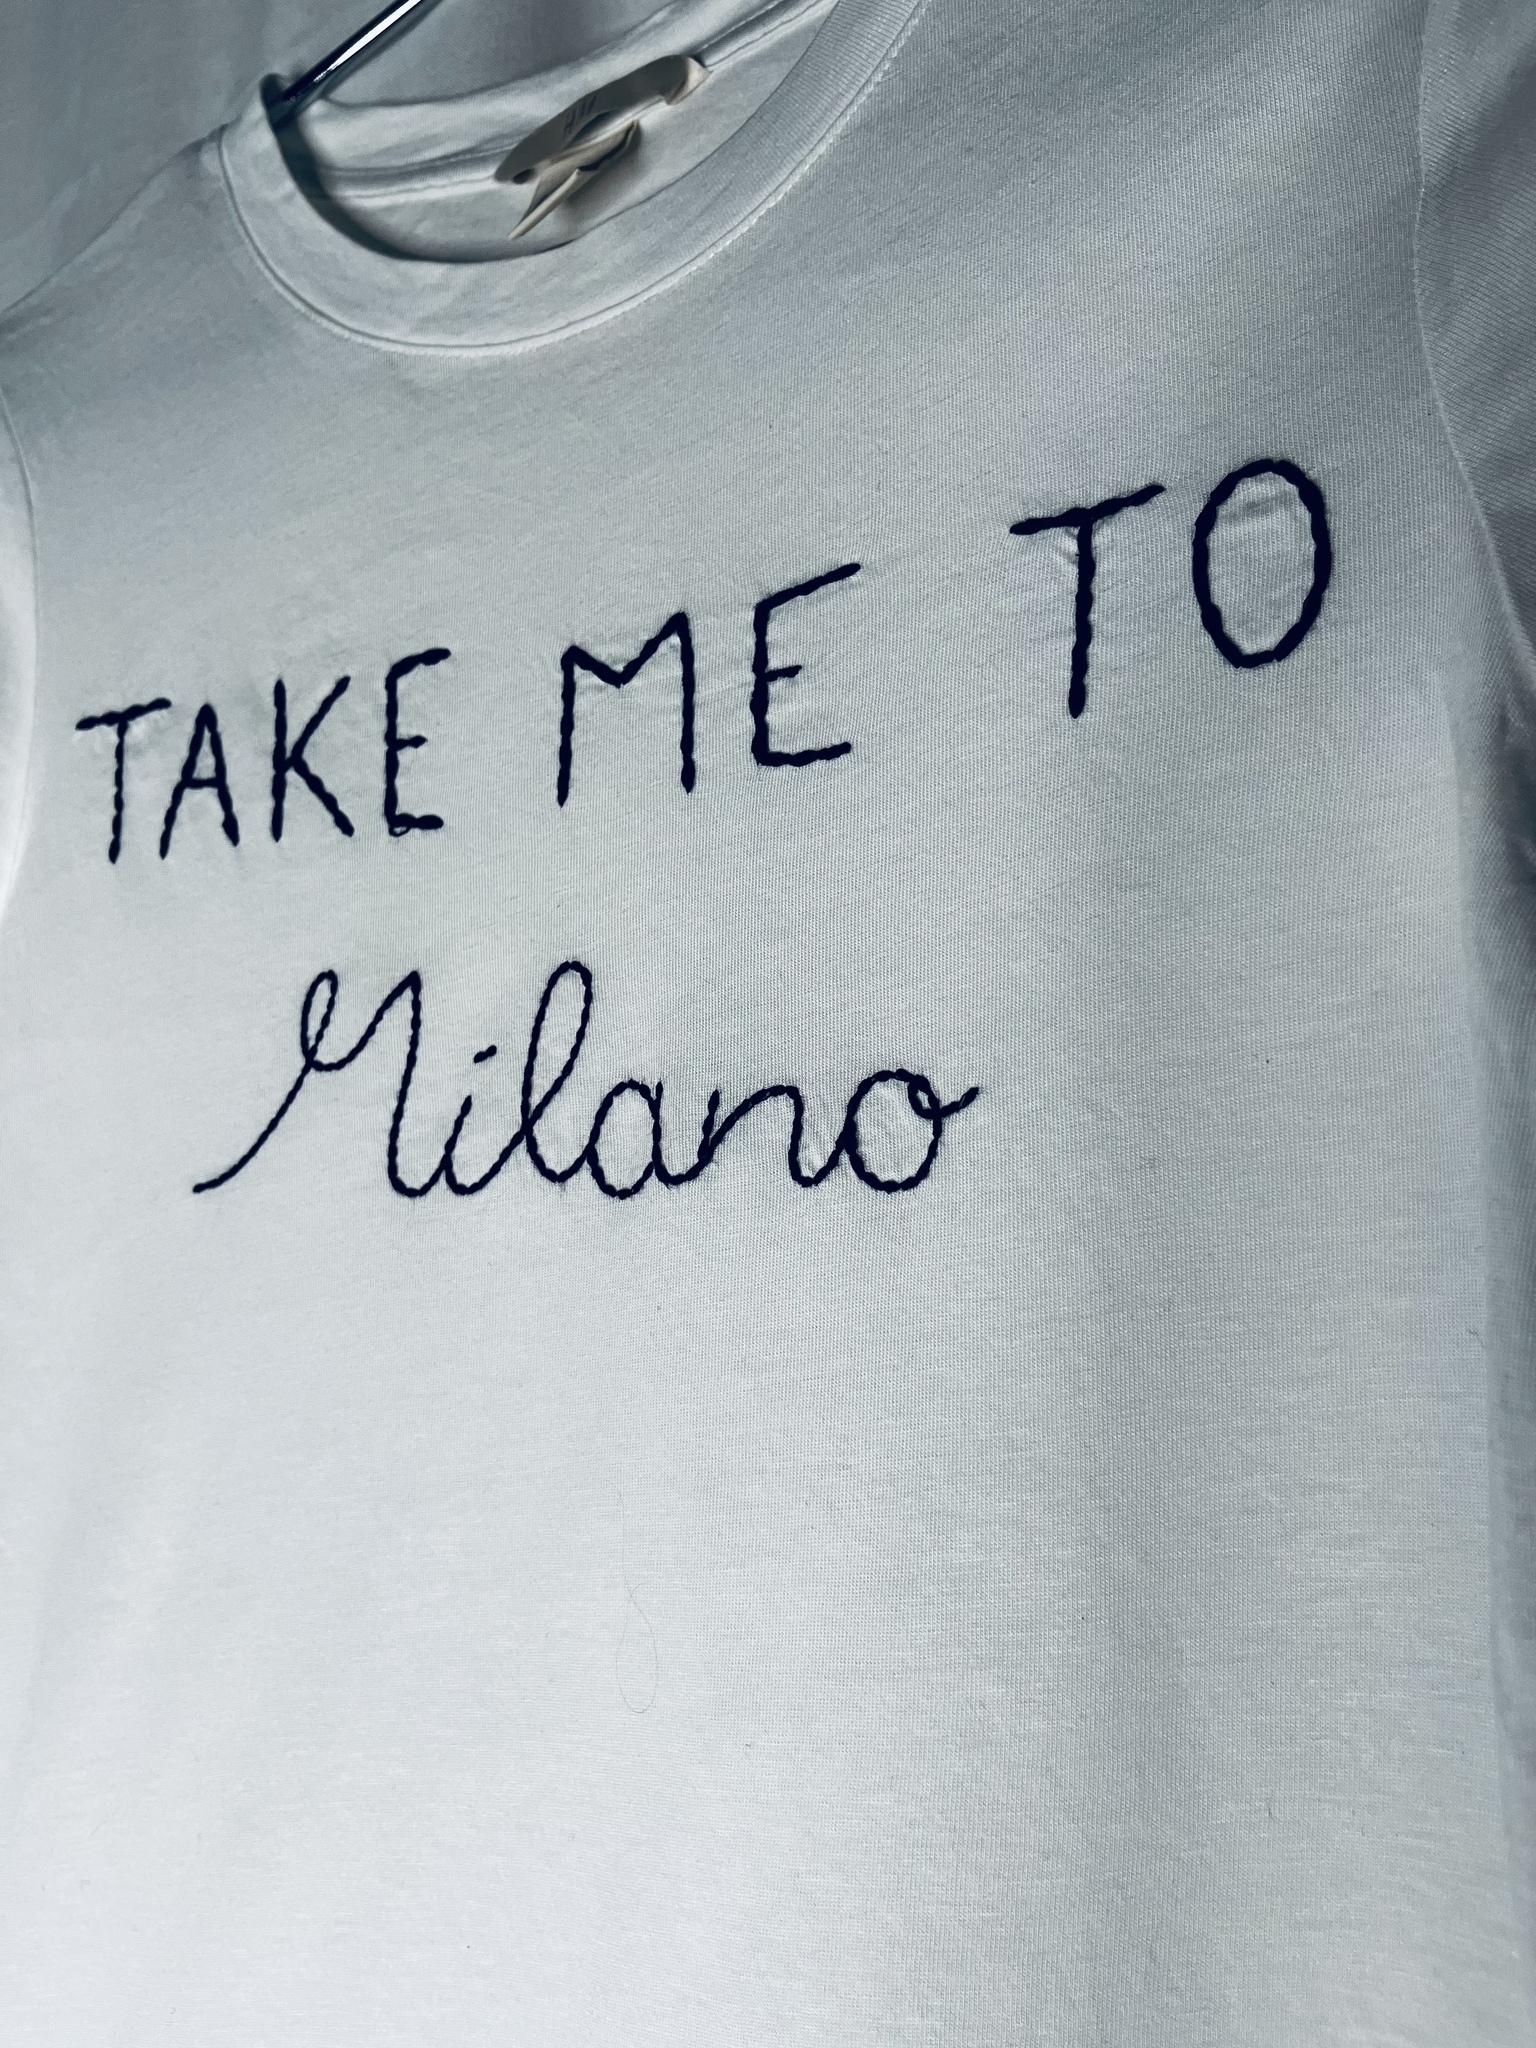 Tisha "Take Me To Milano"